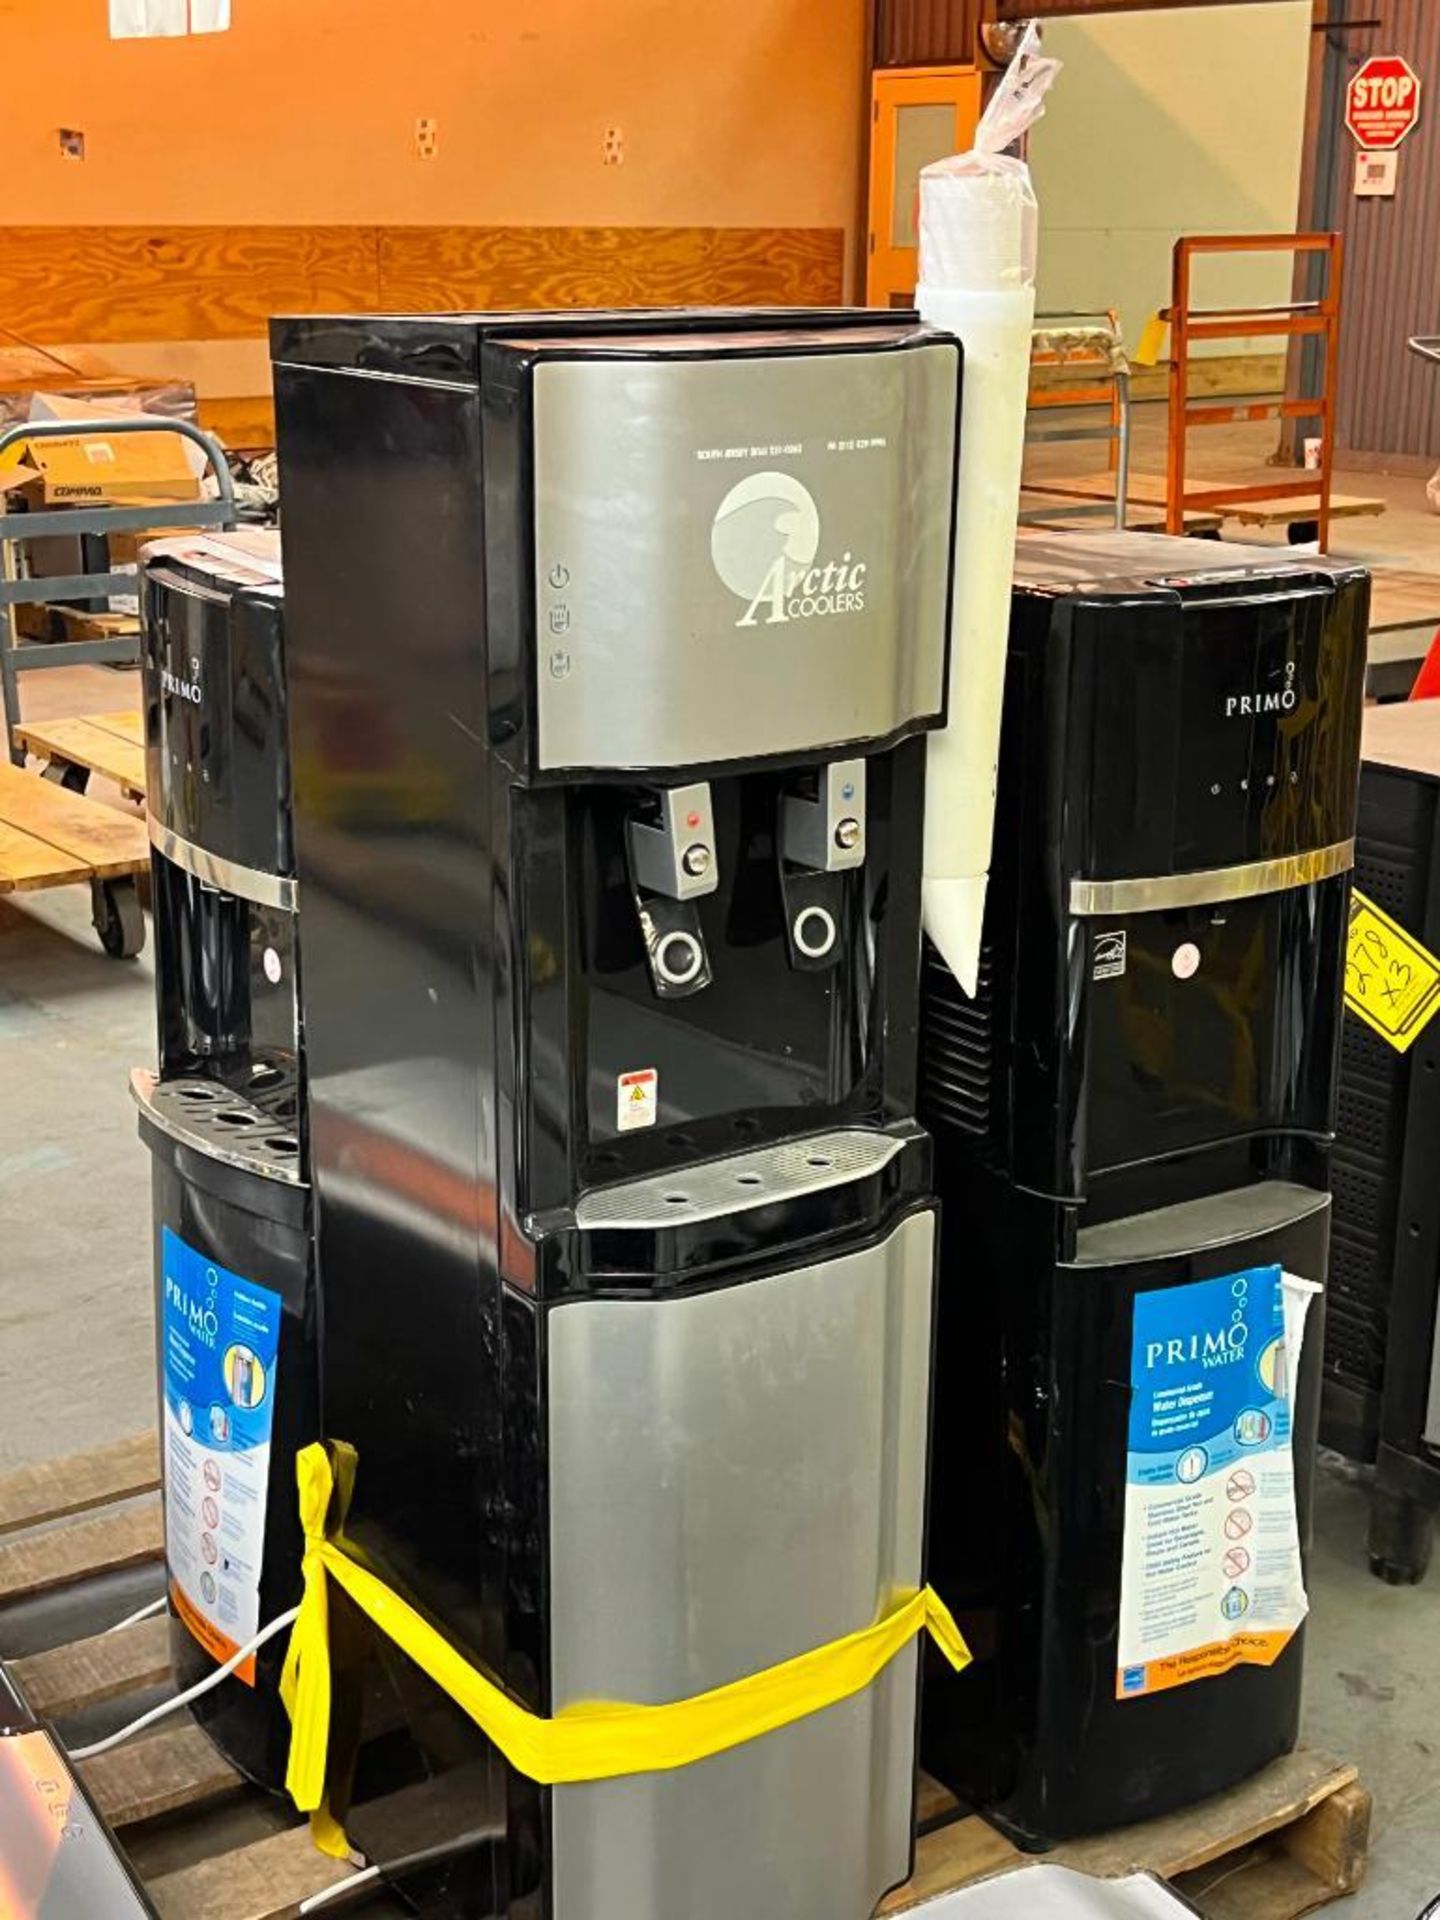 (3x) Water Dispensers; (2) Primo Water Dispensers & (1) Arctic Water Dispenser